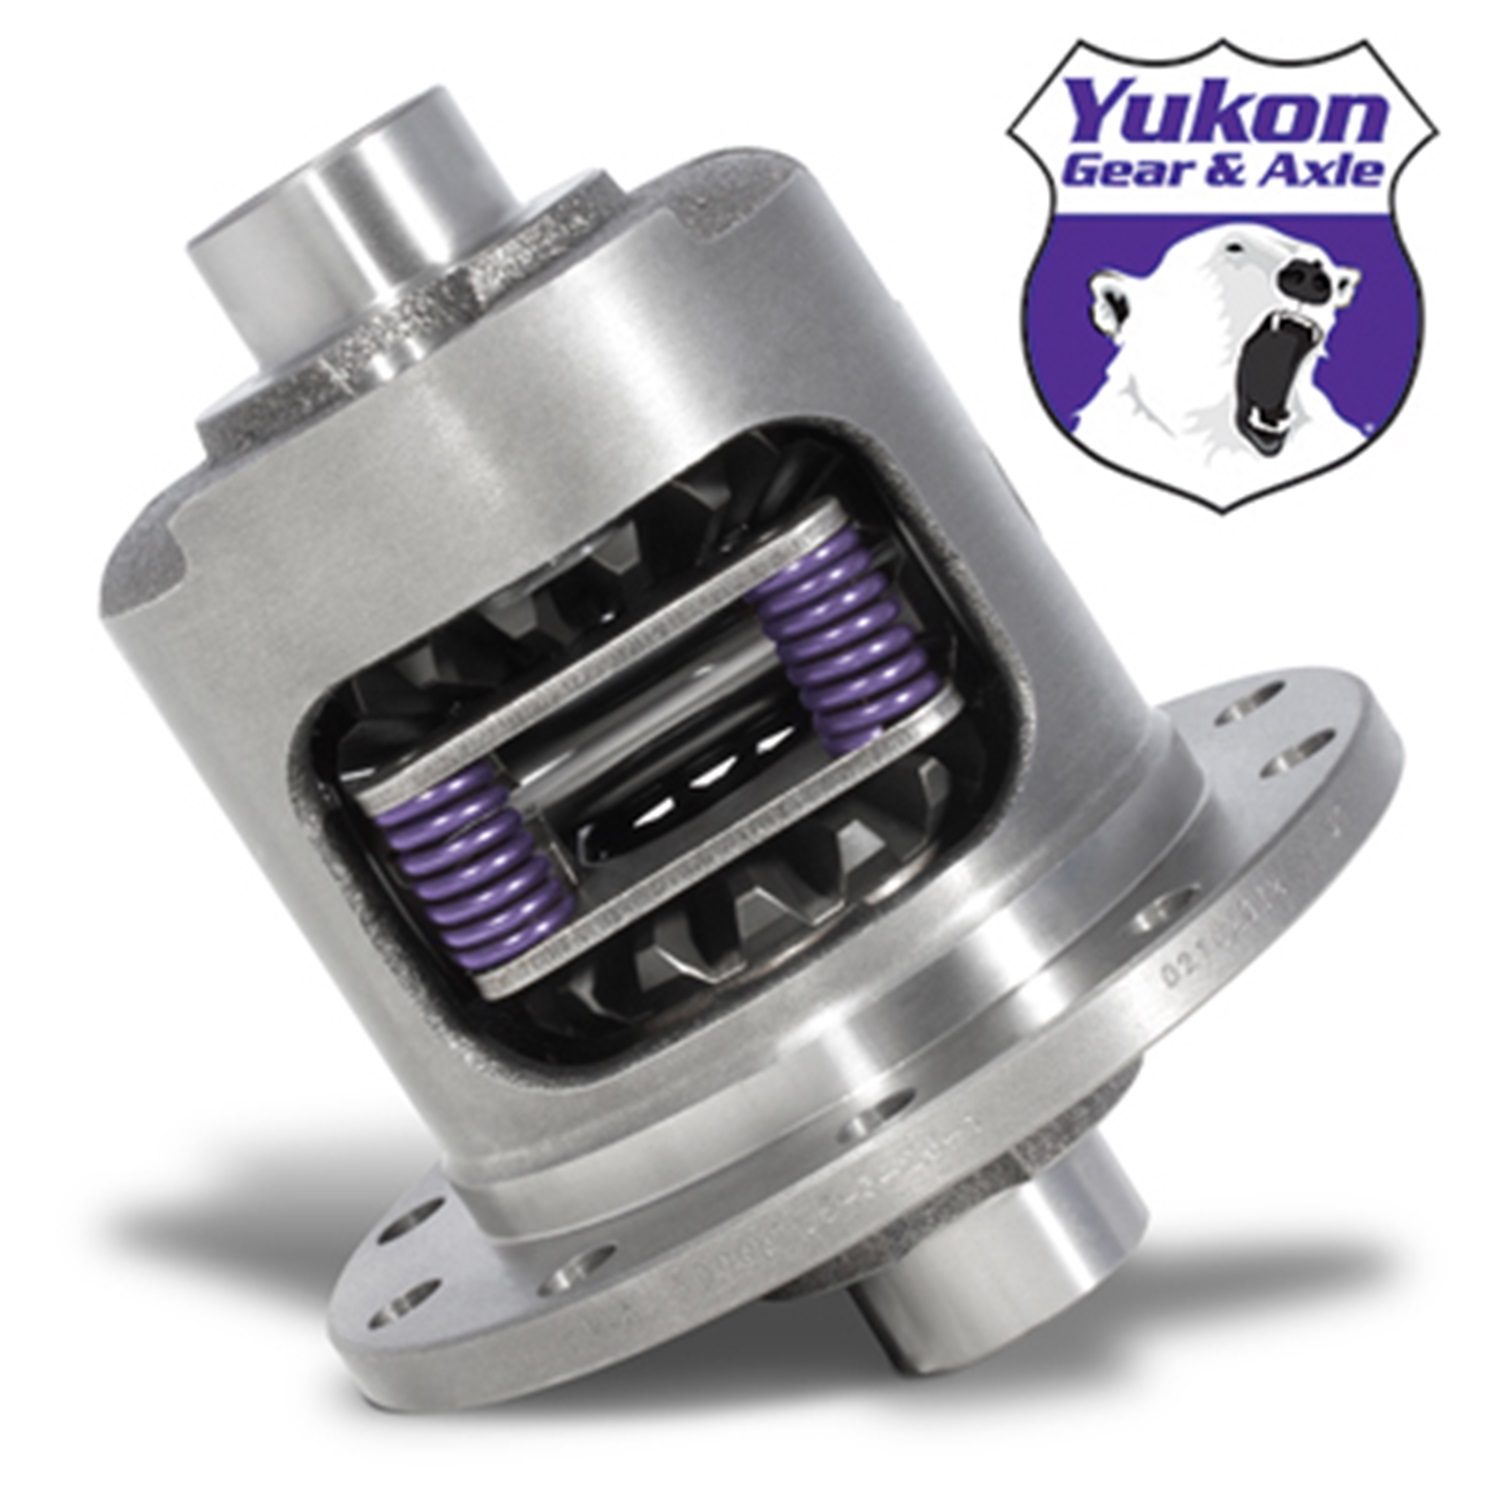 Yukon Gear & Axle Yukon Gear & Axle YDGGM7.5-3-28-SM Dura Grip Positraction